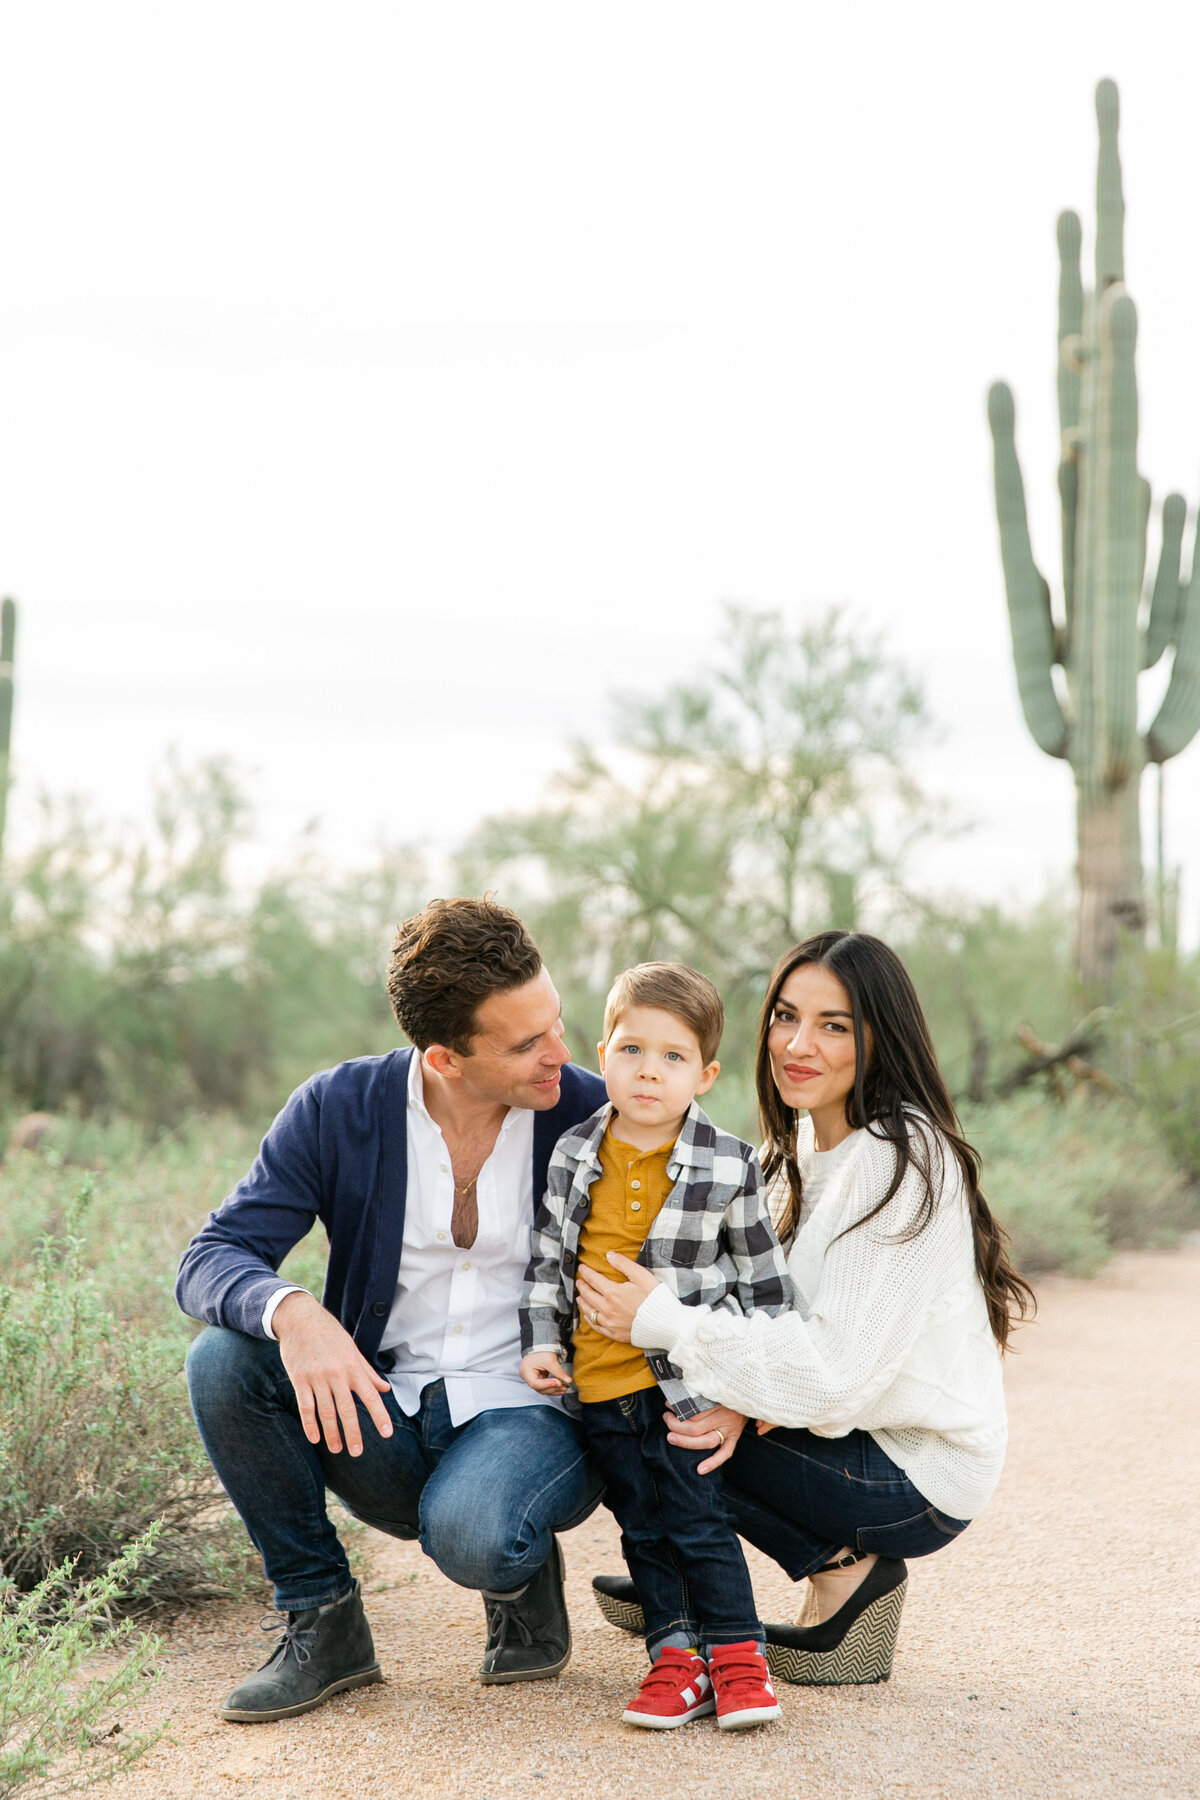 Karlie Colleen Photography - Scottsdale Arizona - Family portraits - Taylor & Family-72